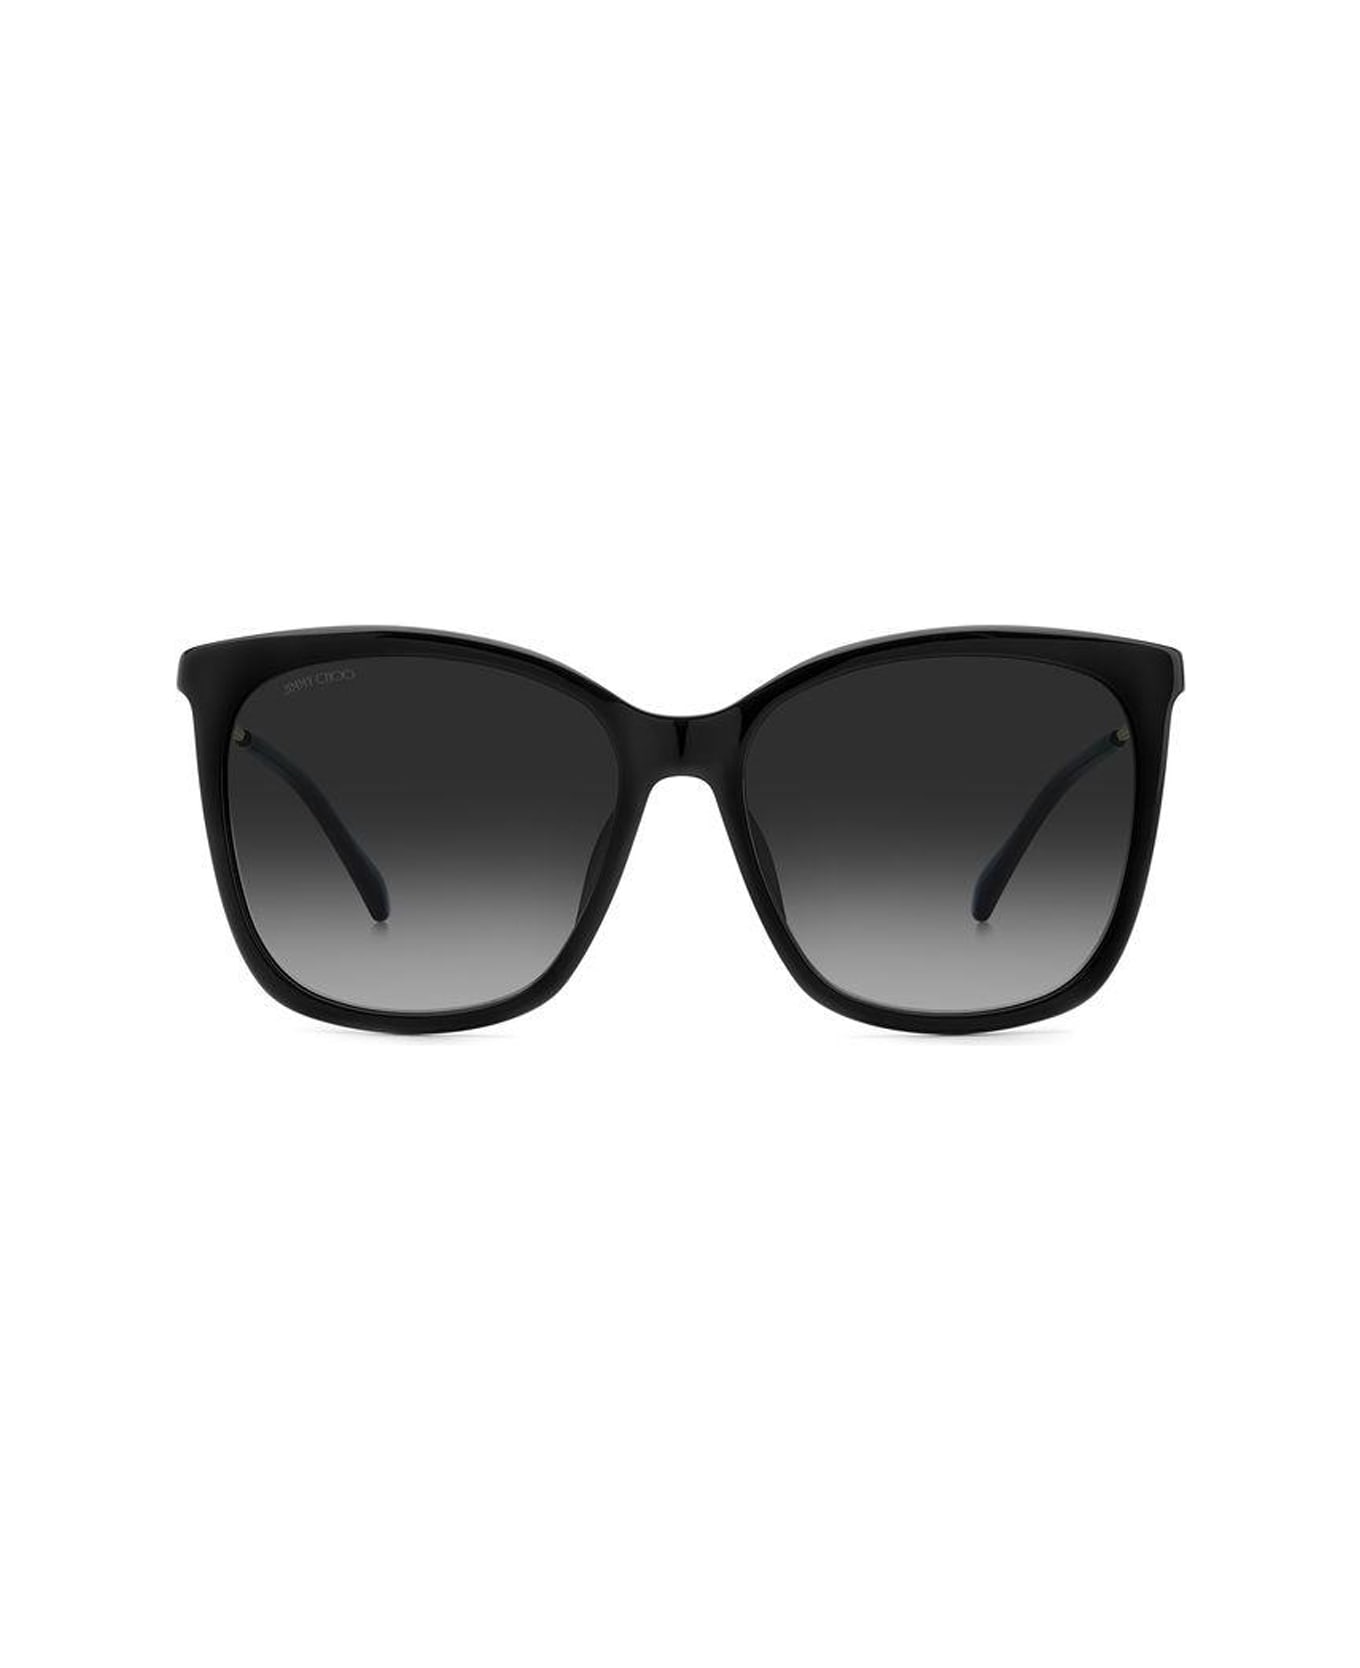 Jimmy Choo Eyewear Jc Nerea/g/s 807/9o Black Sunglasses - Nero サングラス